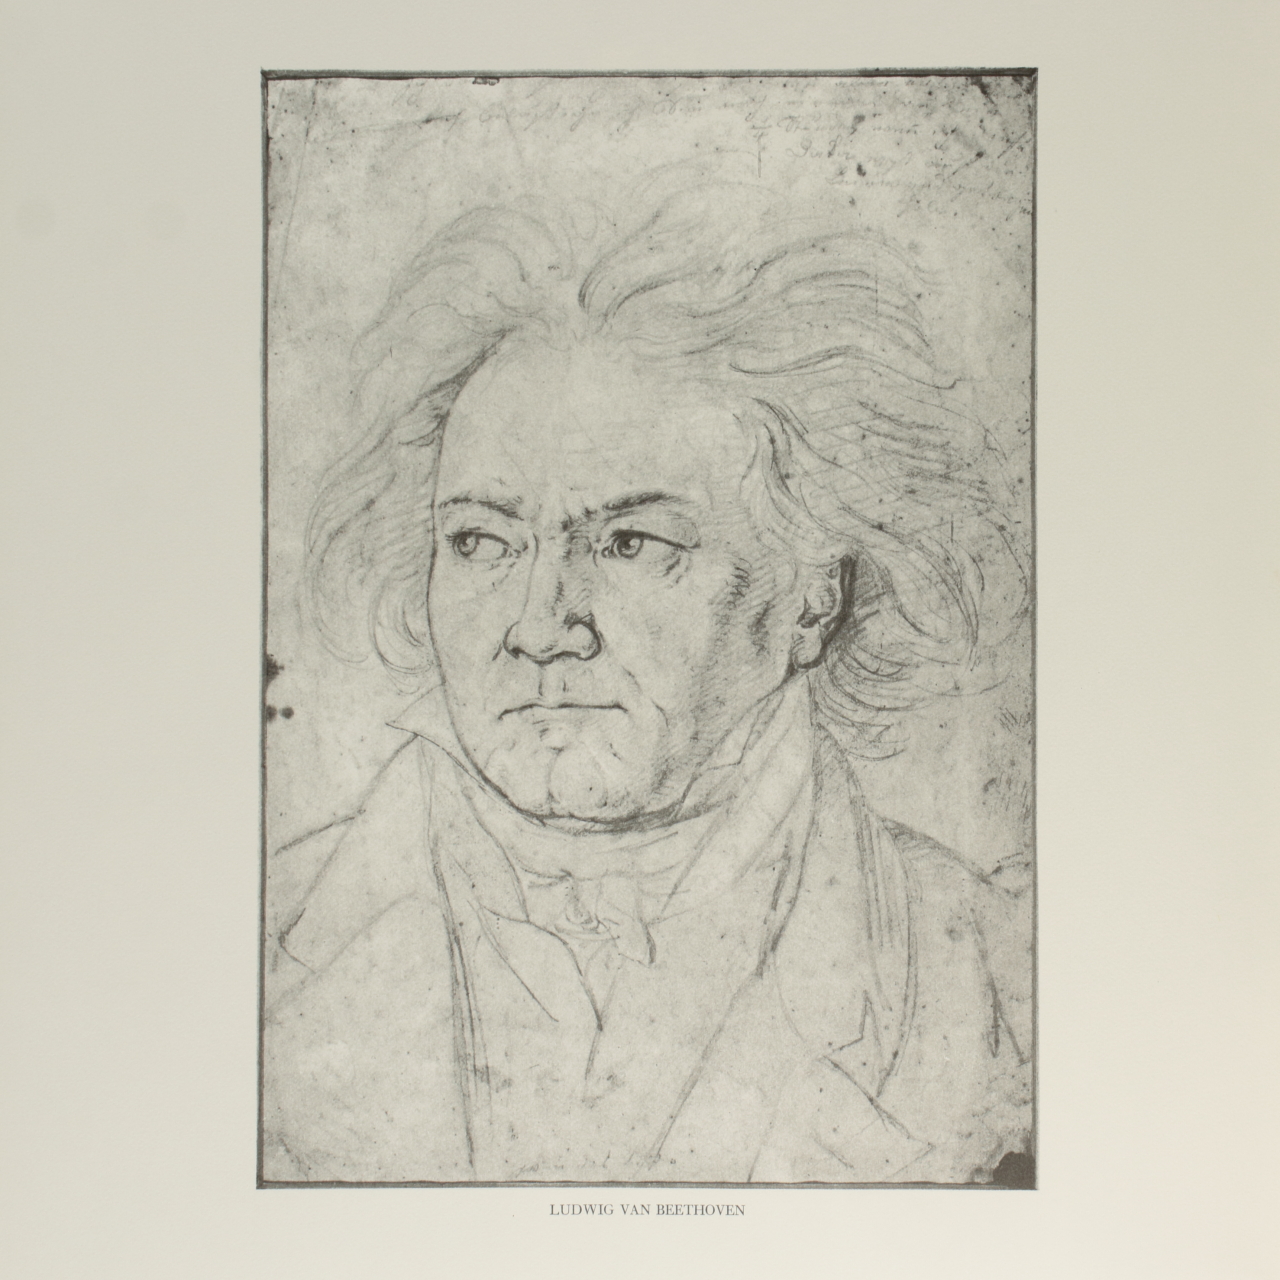 Beethoven: Missa solemnis